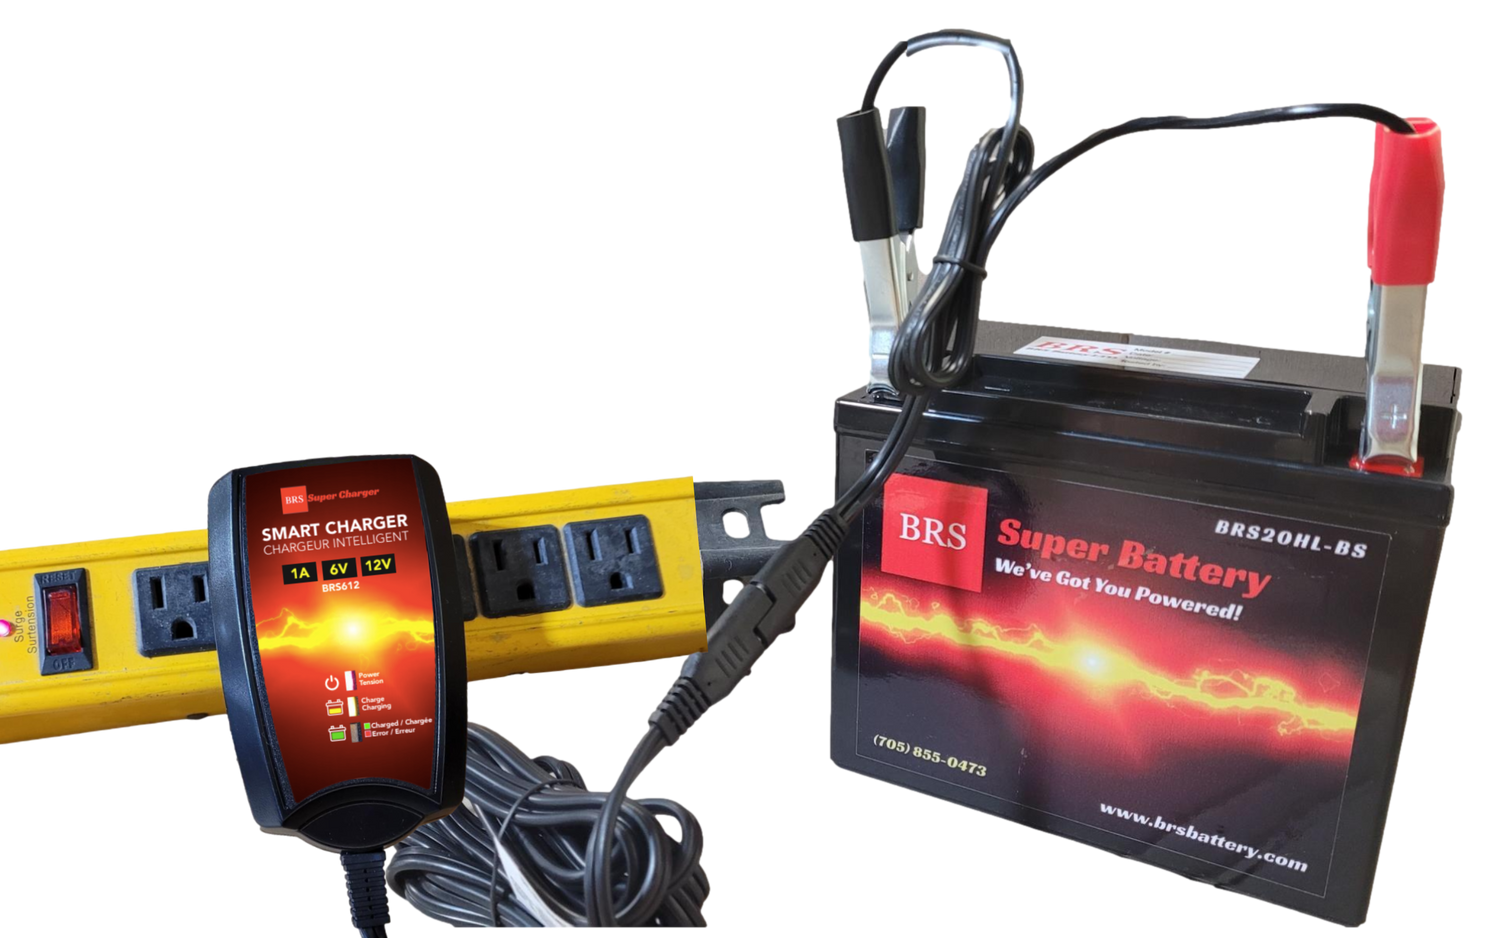 BRS20HL-BS 30 Day Warranty Battery & Smart Charger / Maintainer Combo Bundle Kit - BRS Super Battery